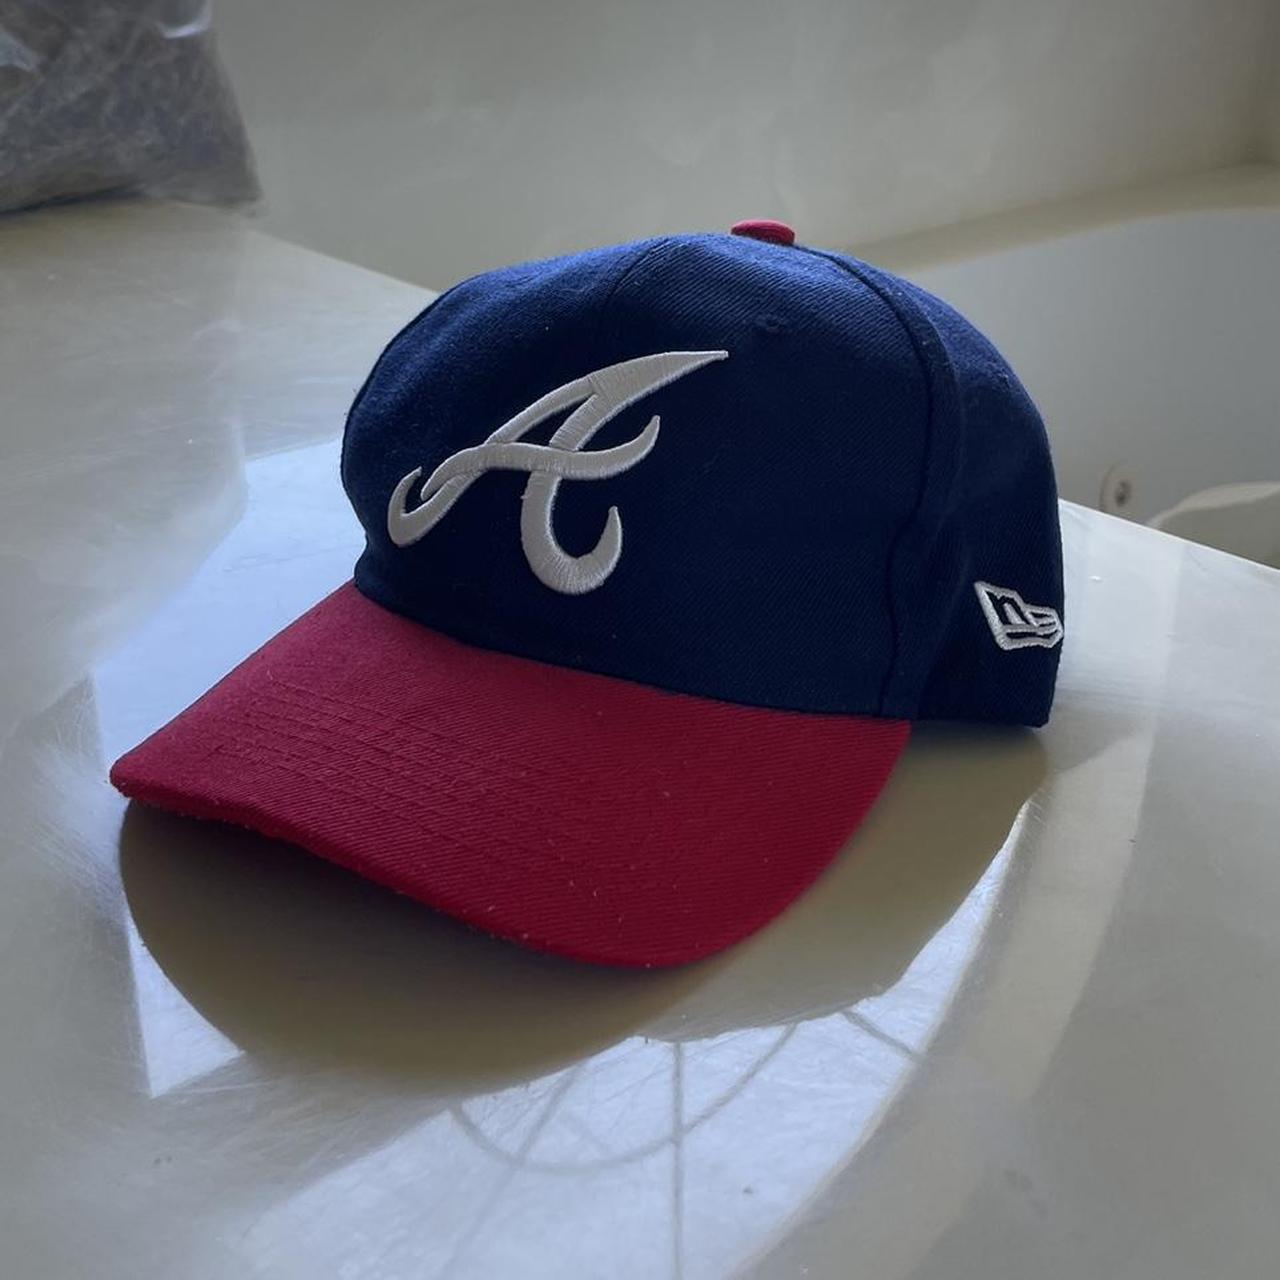 MLB Men's Caps - Red